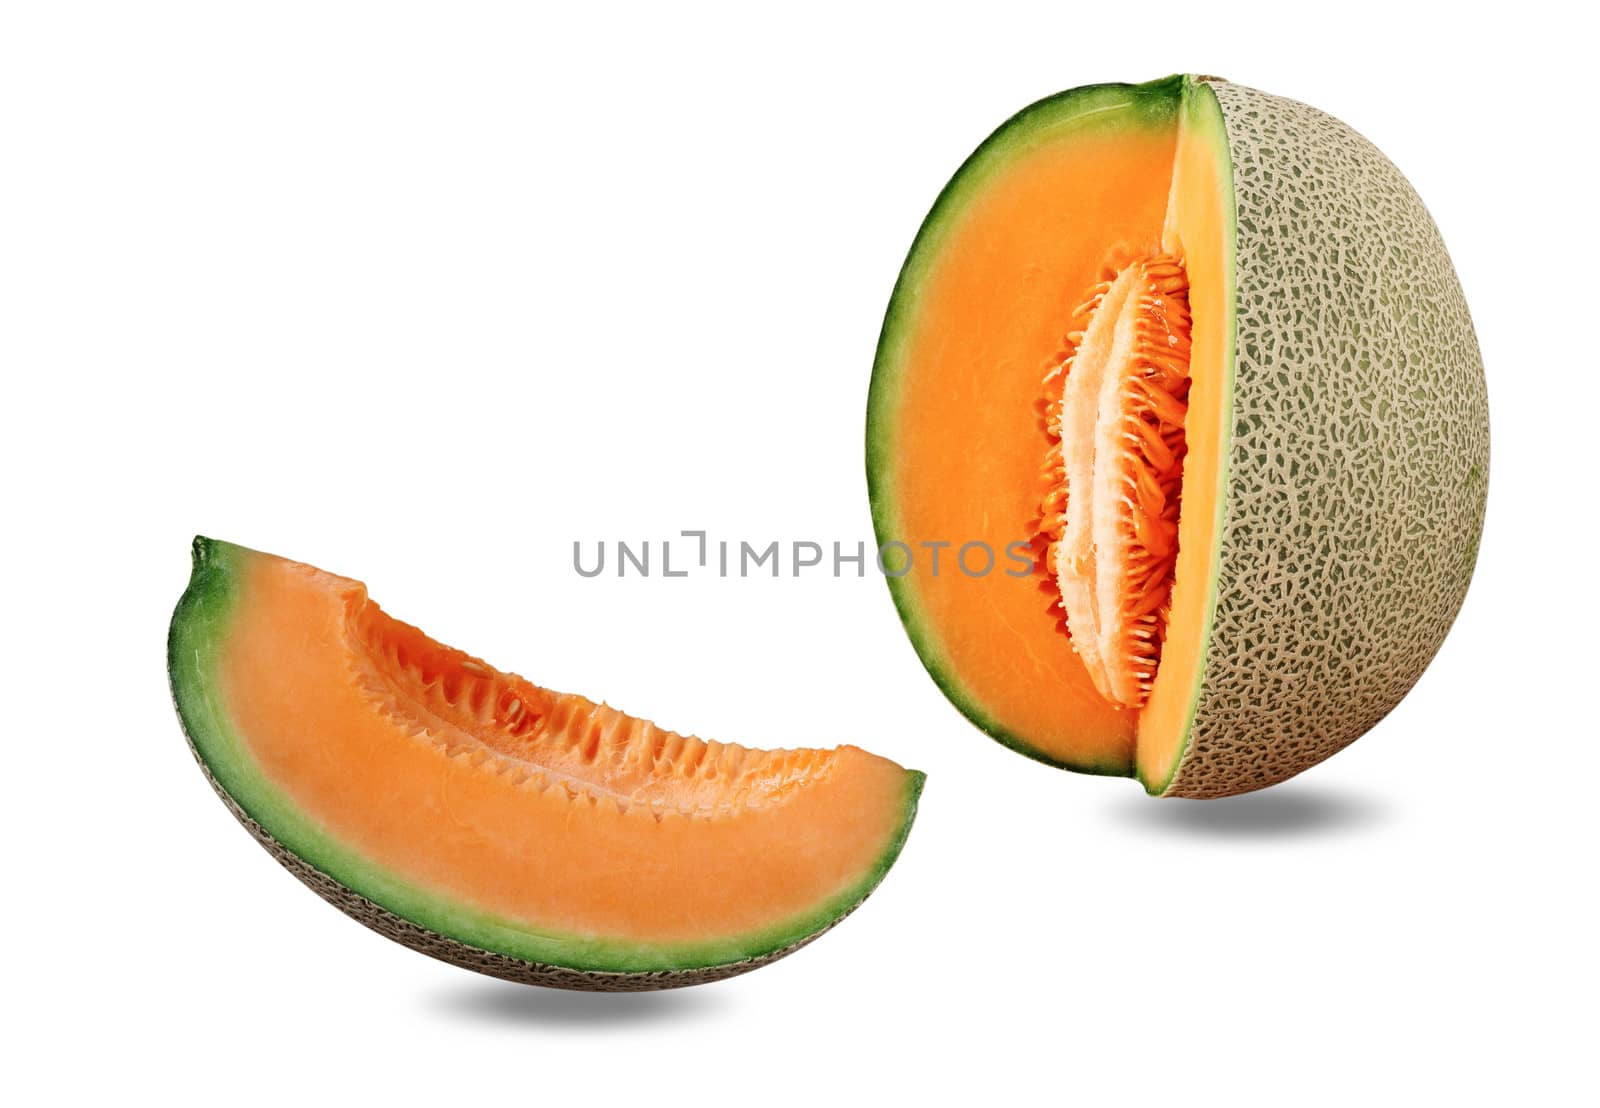 Melon sliced on a white background.